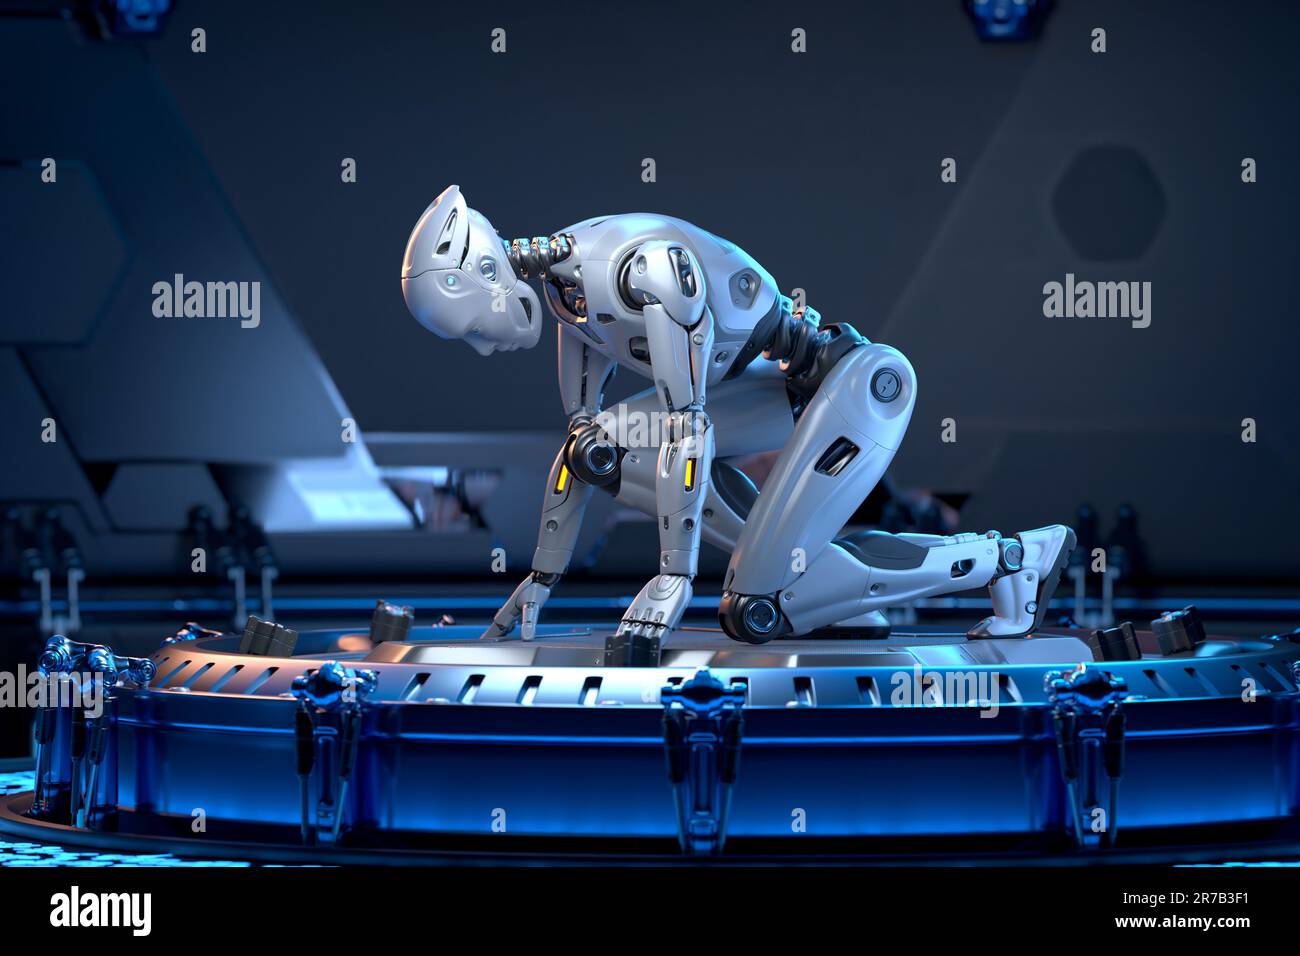 Robot standing in start position in Sci-Fi interior. 3D illustration Stock Photo